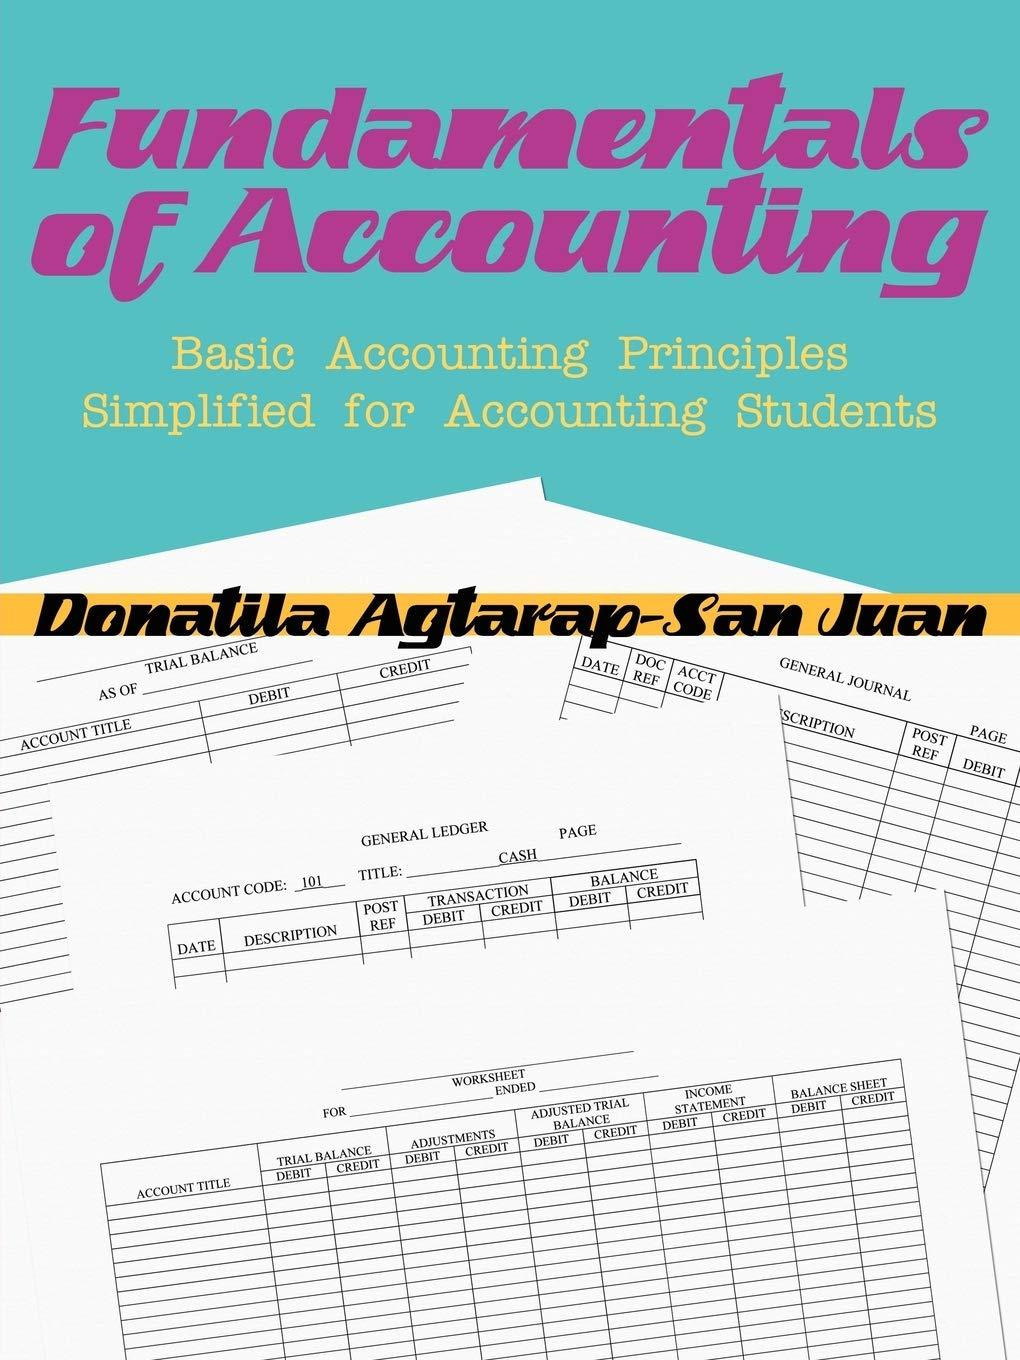 fundamentals of accounting 1st edition donatila agtarap, san juan 1434322998, 978-1434322999